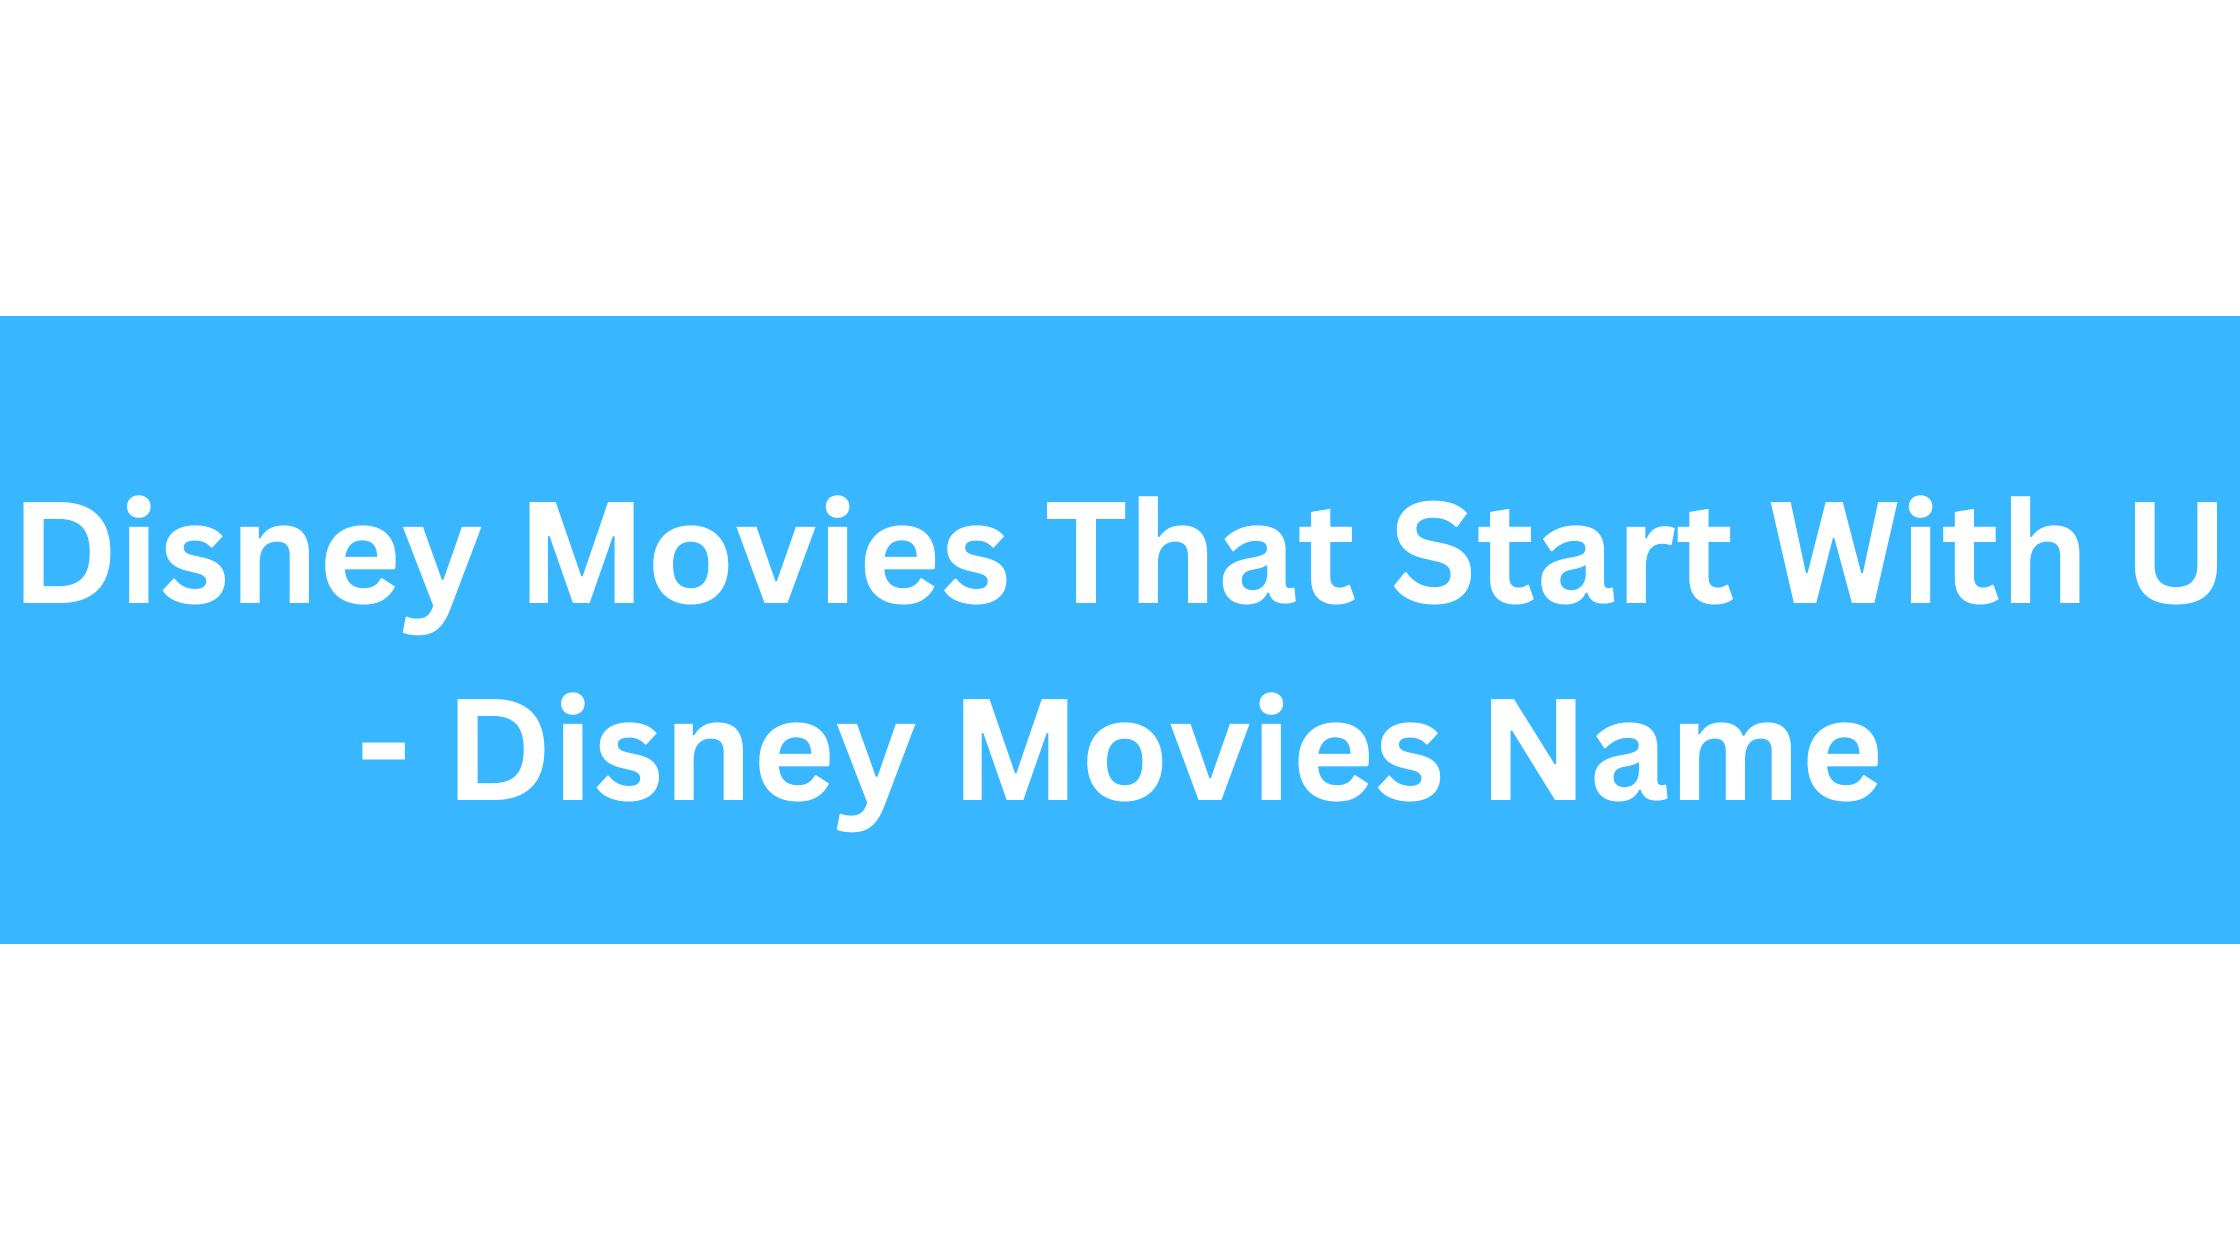 Disney Movies That Start With U